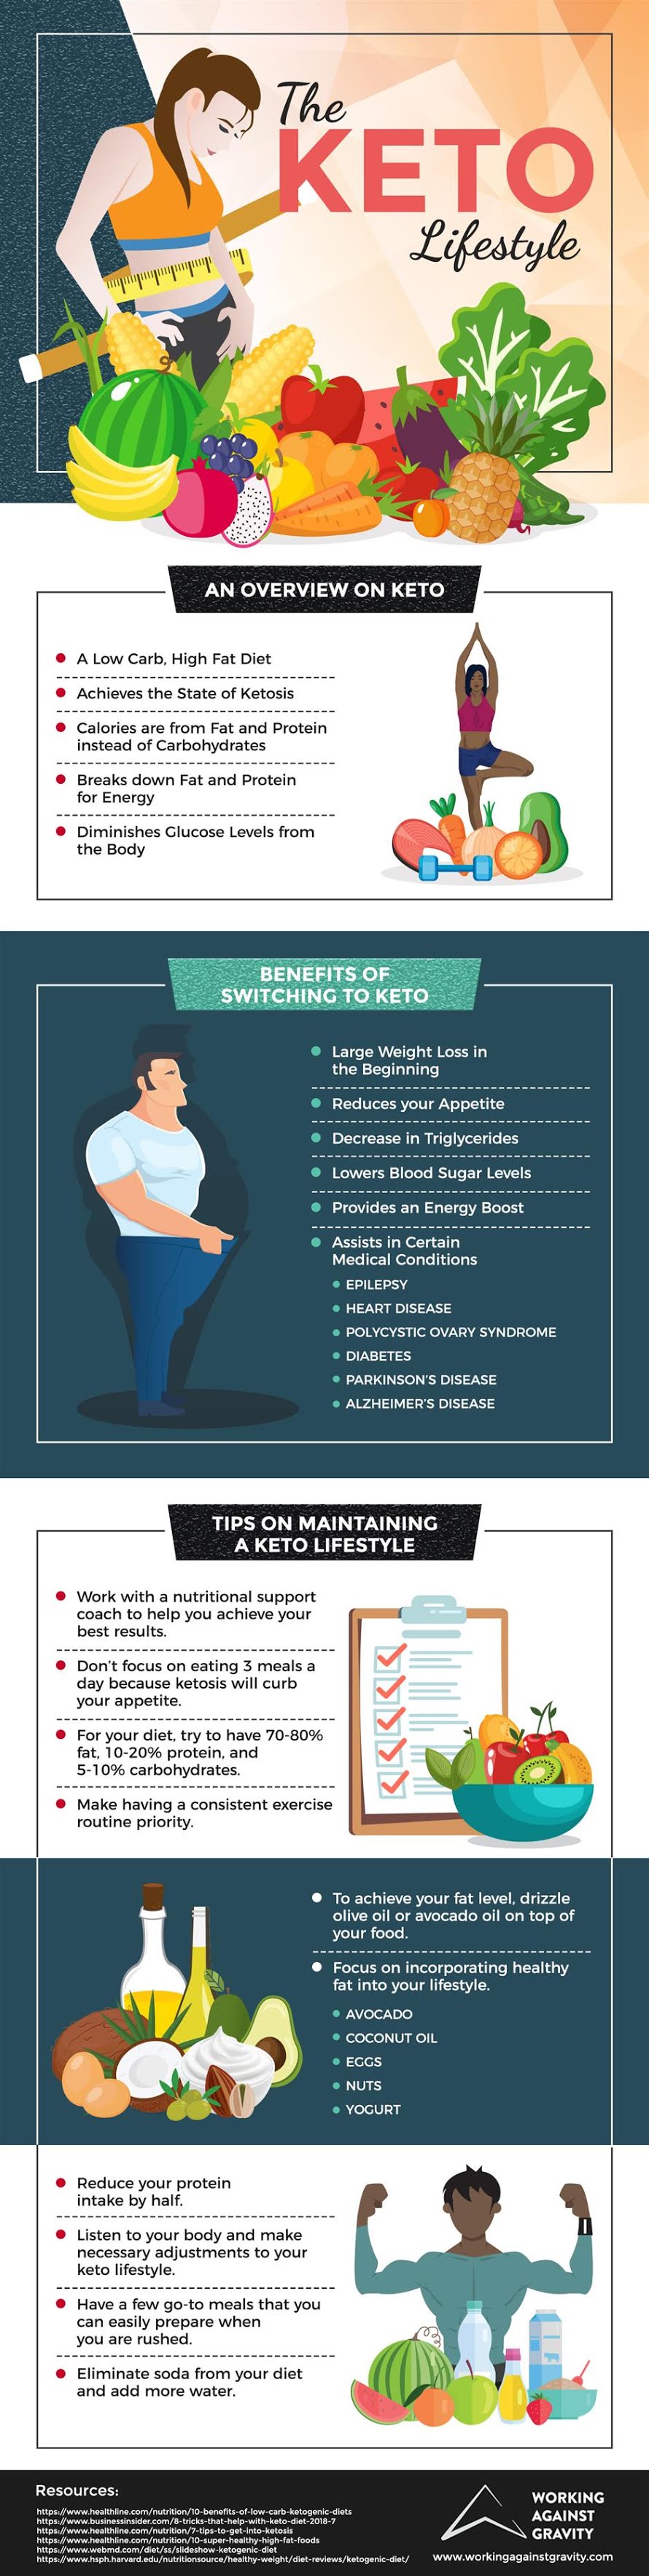 Benefits of a Keto Diet